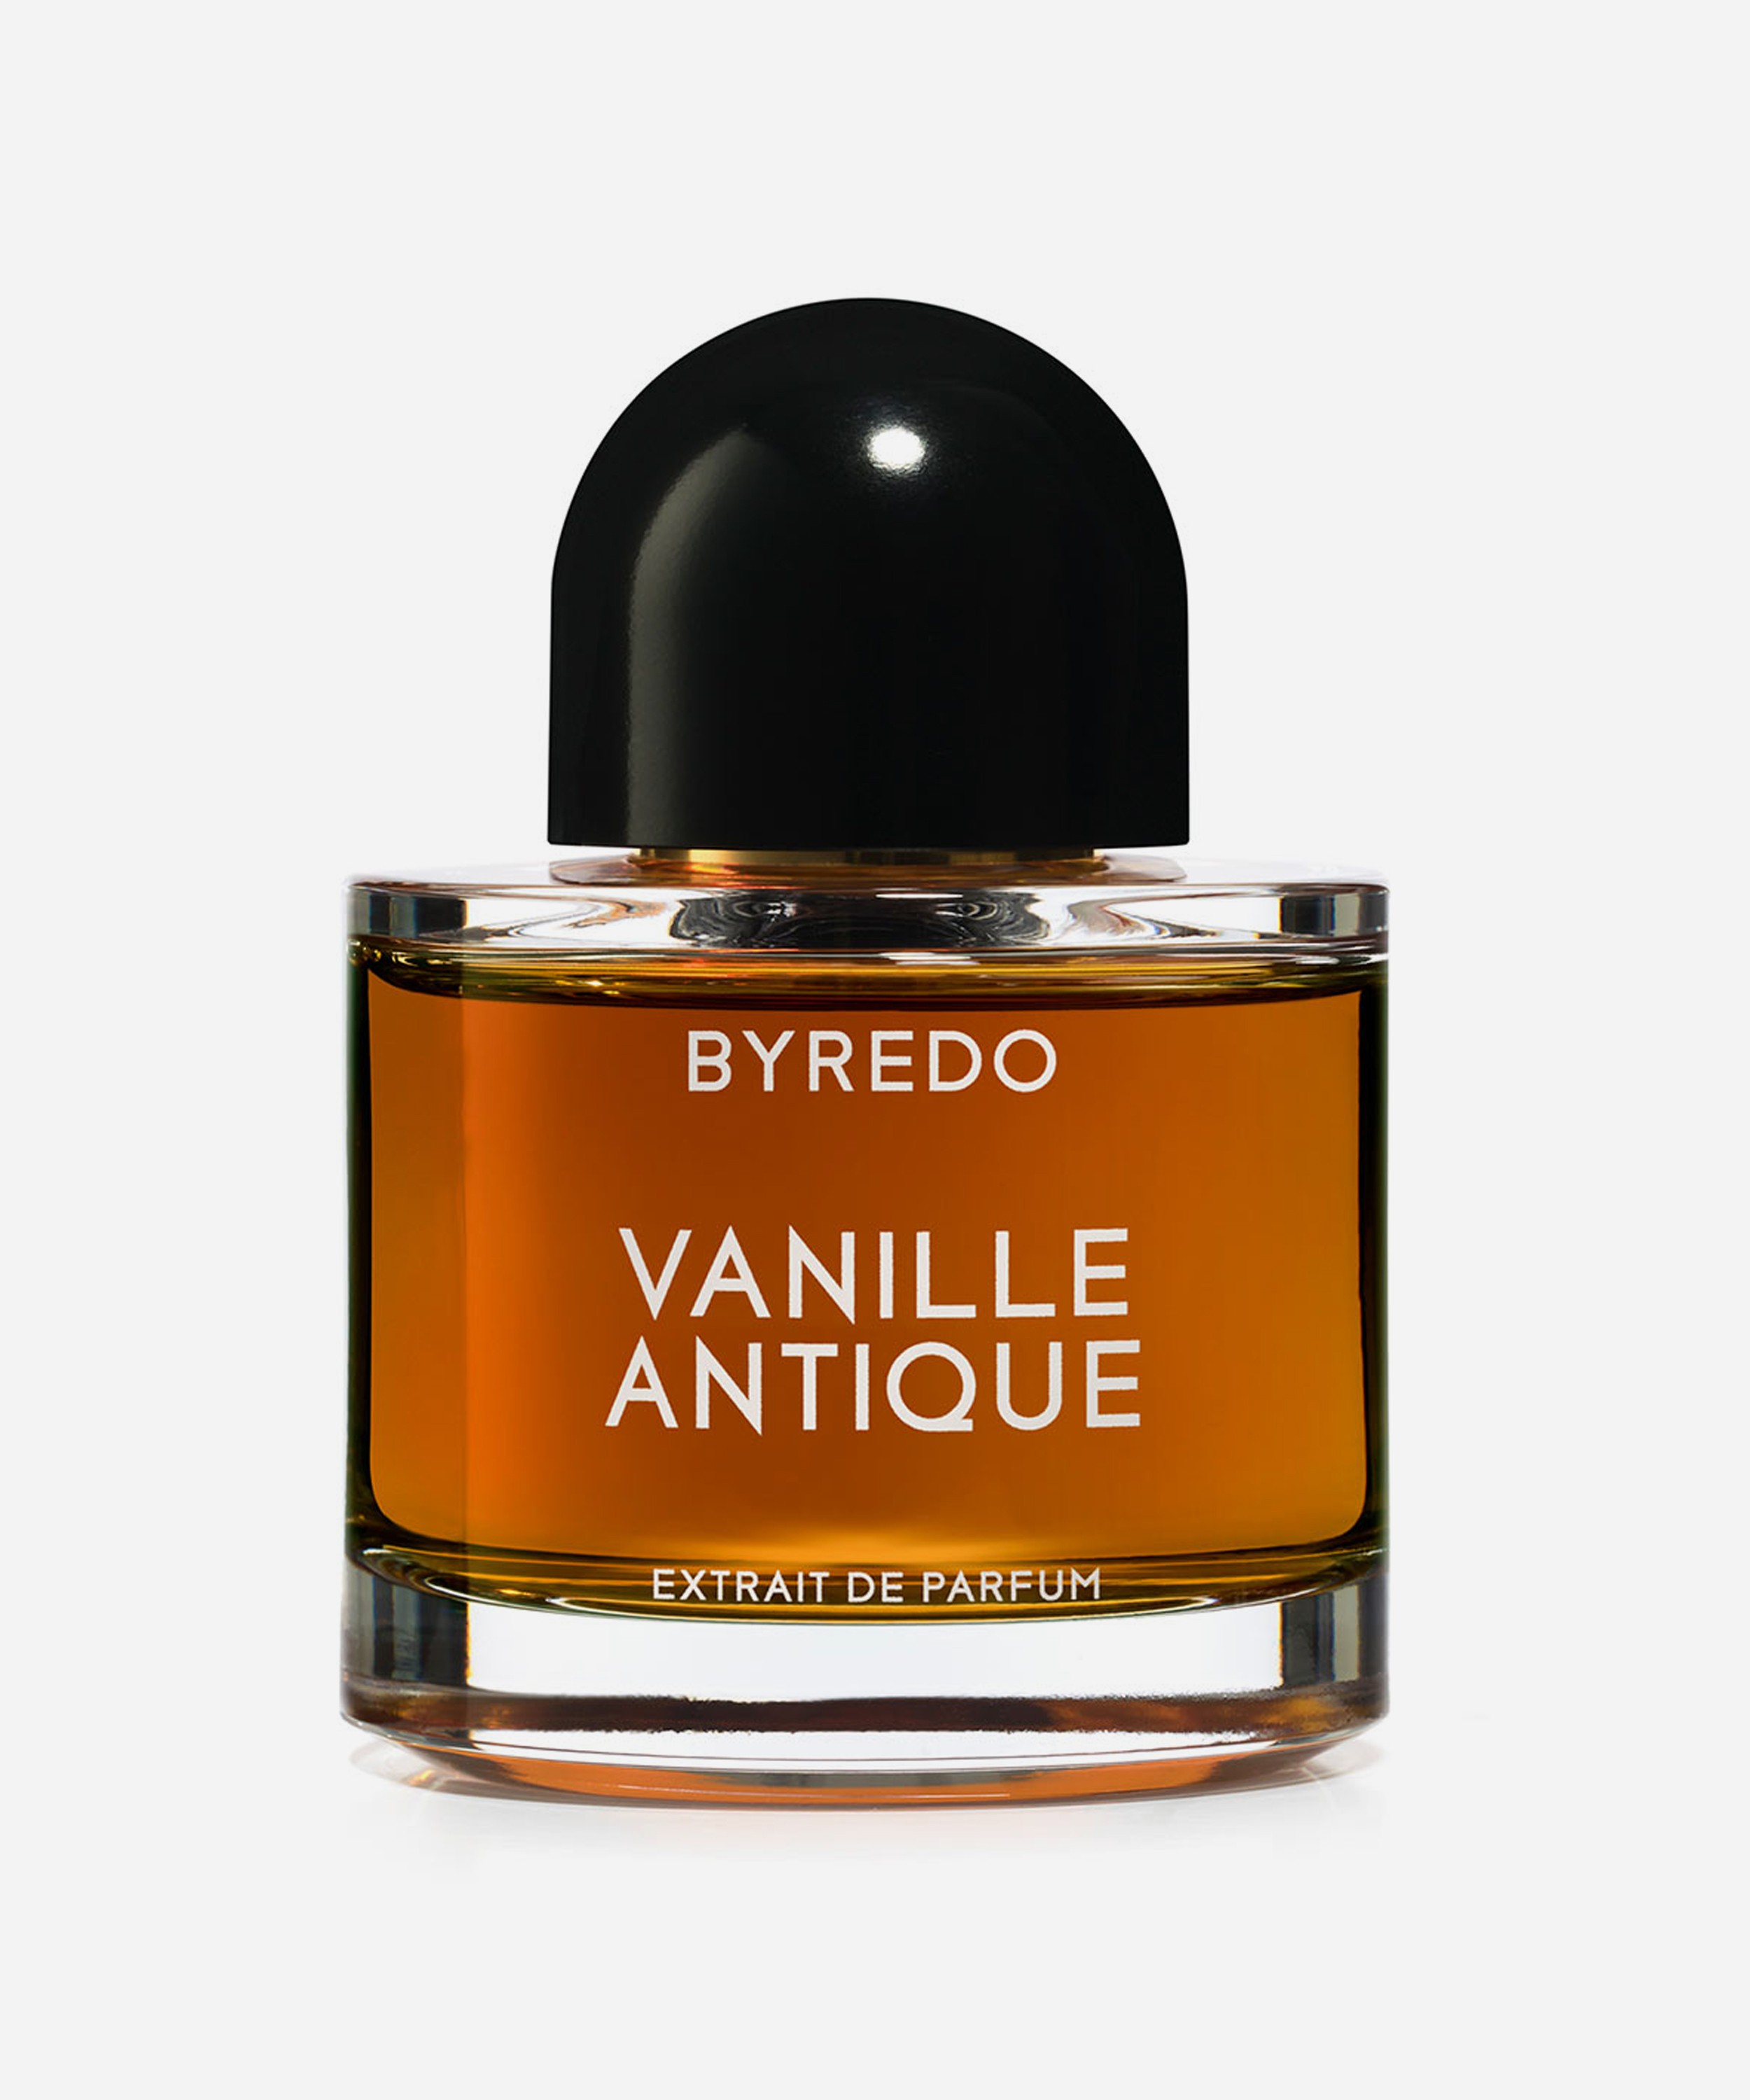 Byredo - Vanille Antique Extrait de Parfum 50ml image number 0